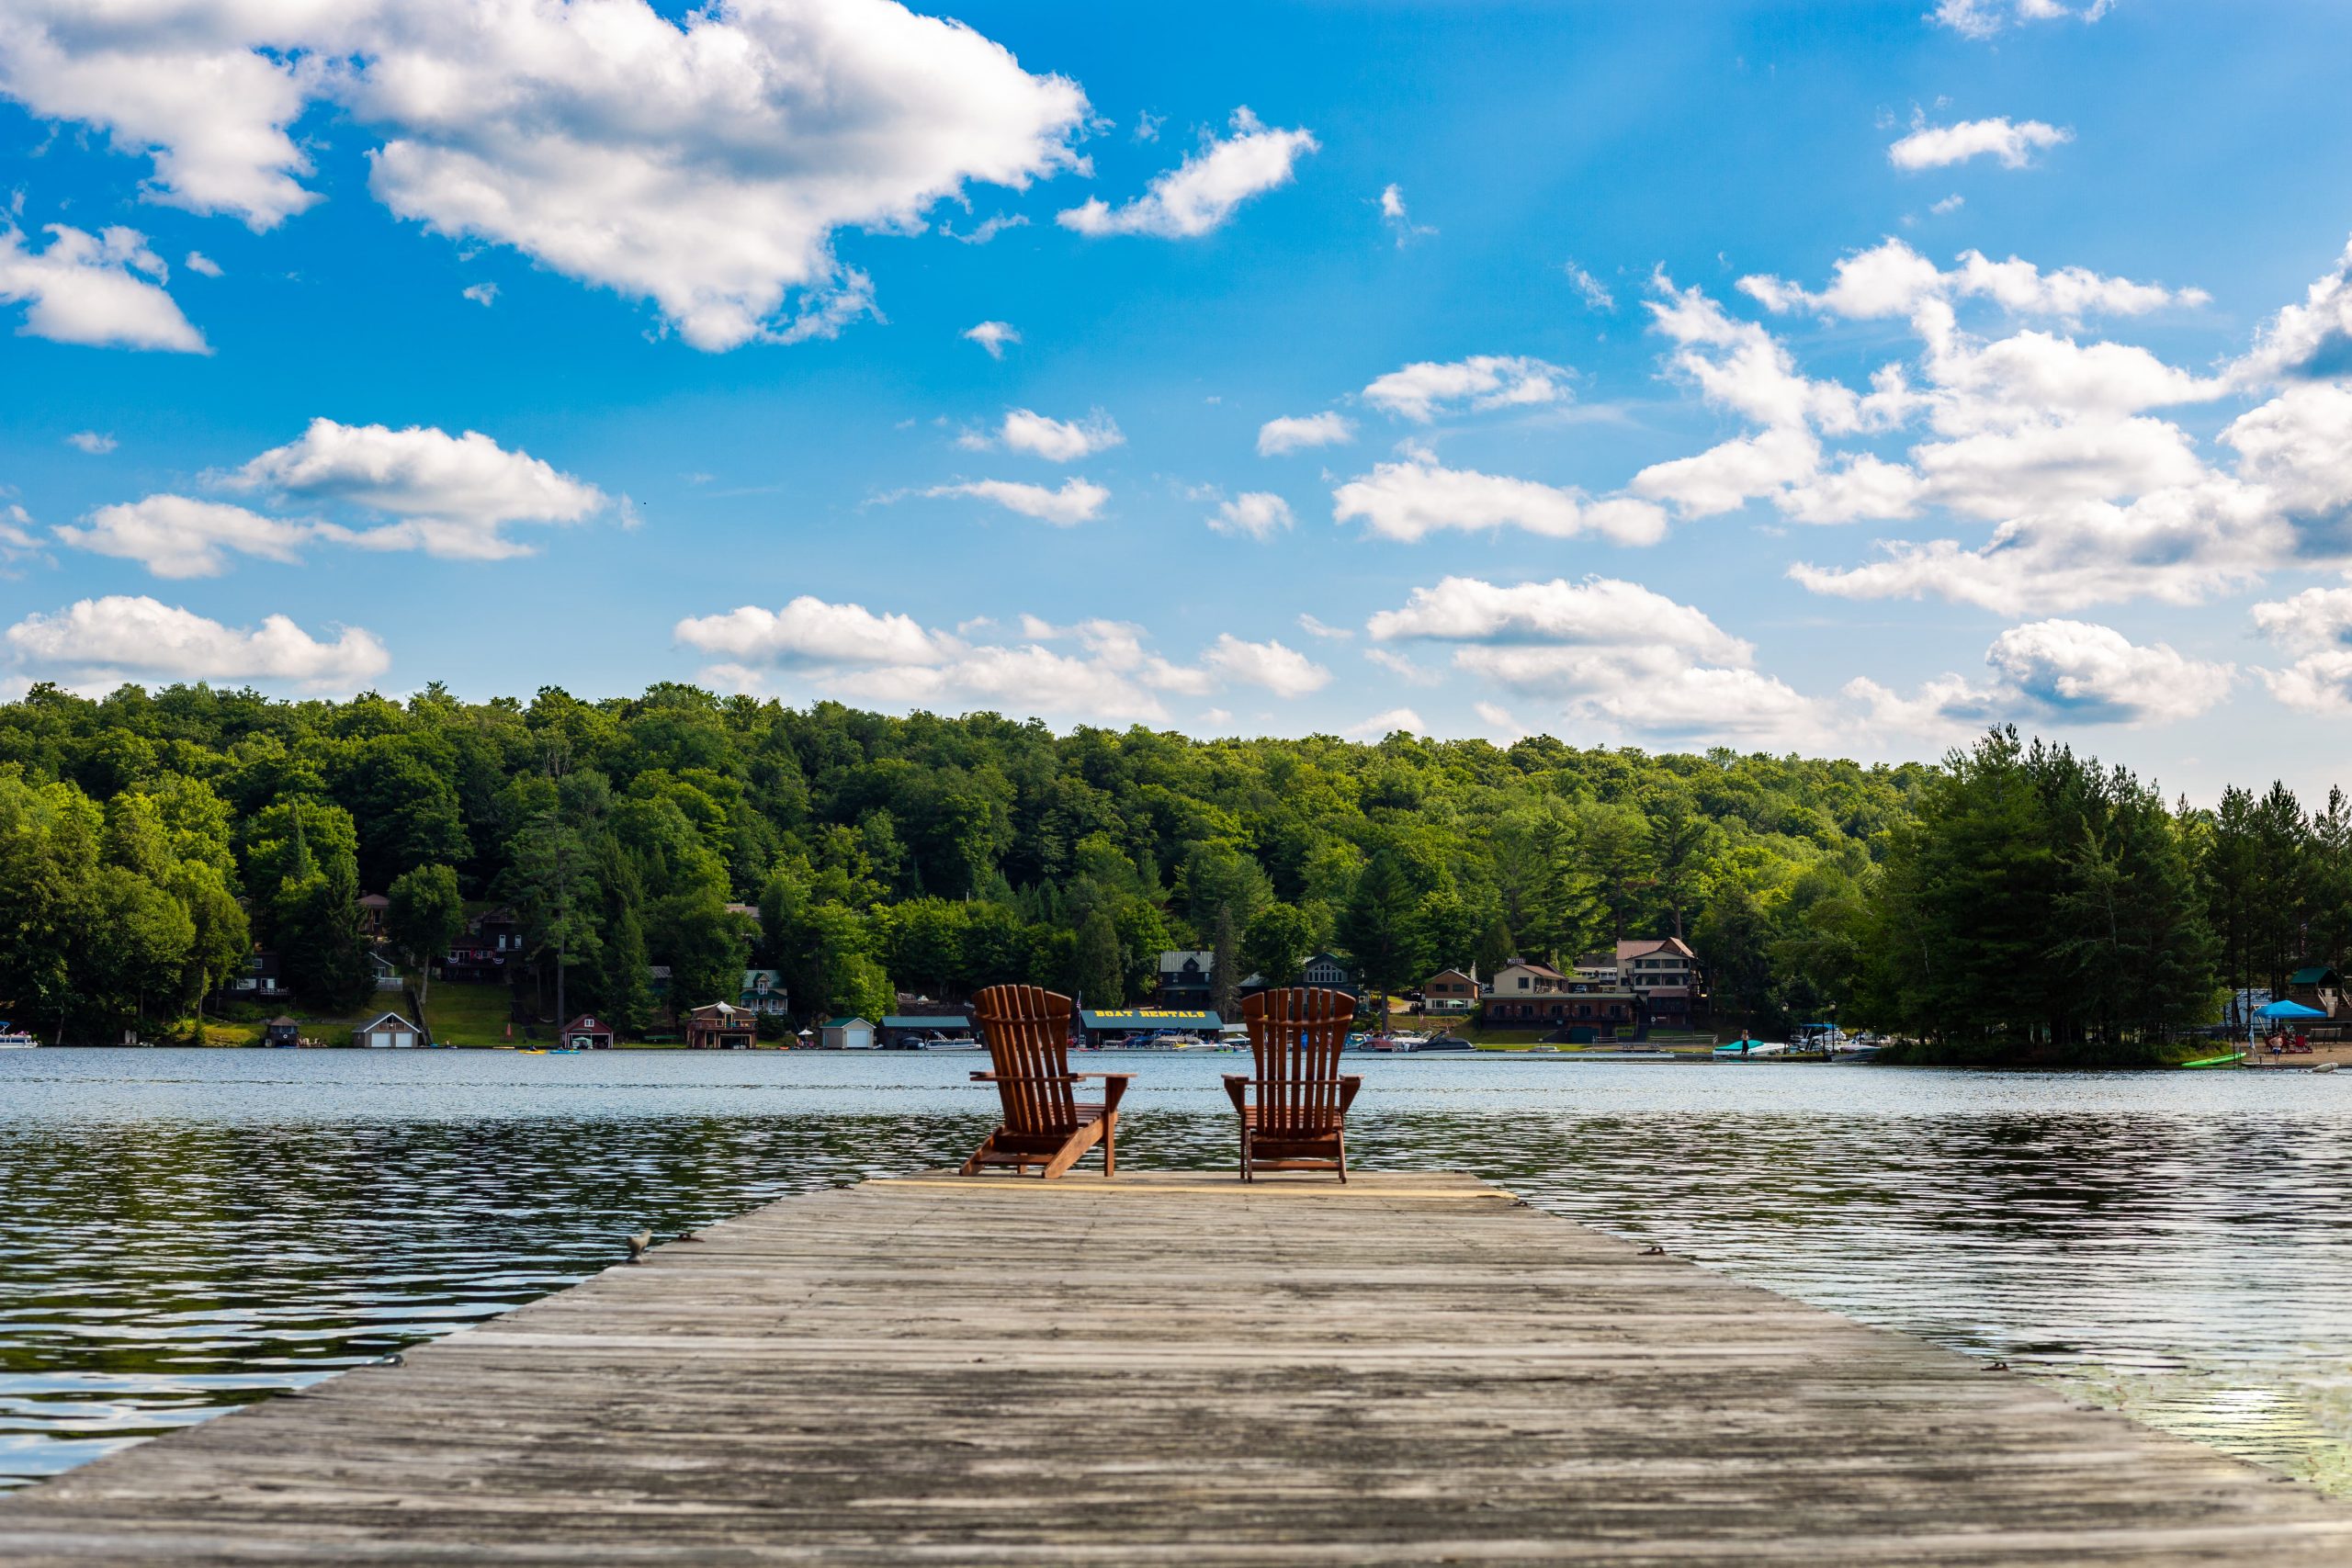 Adirondack chairs on the lake